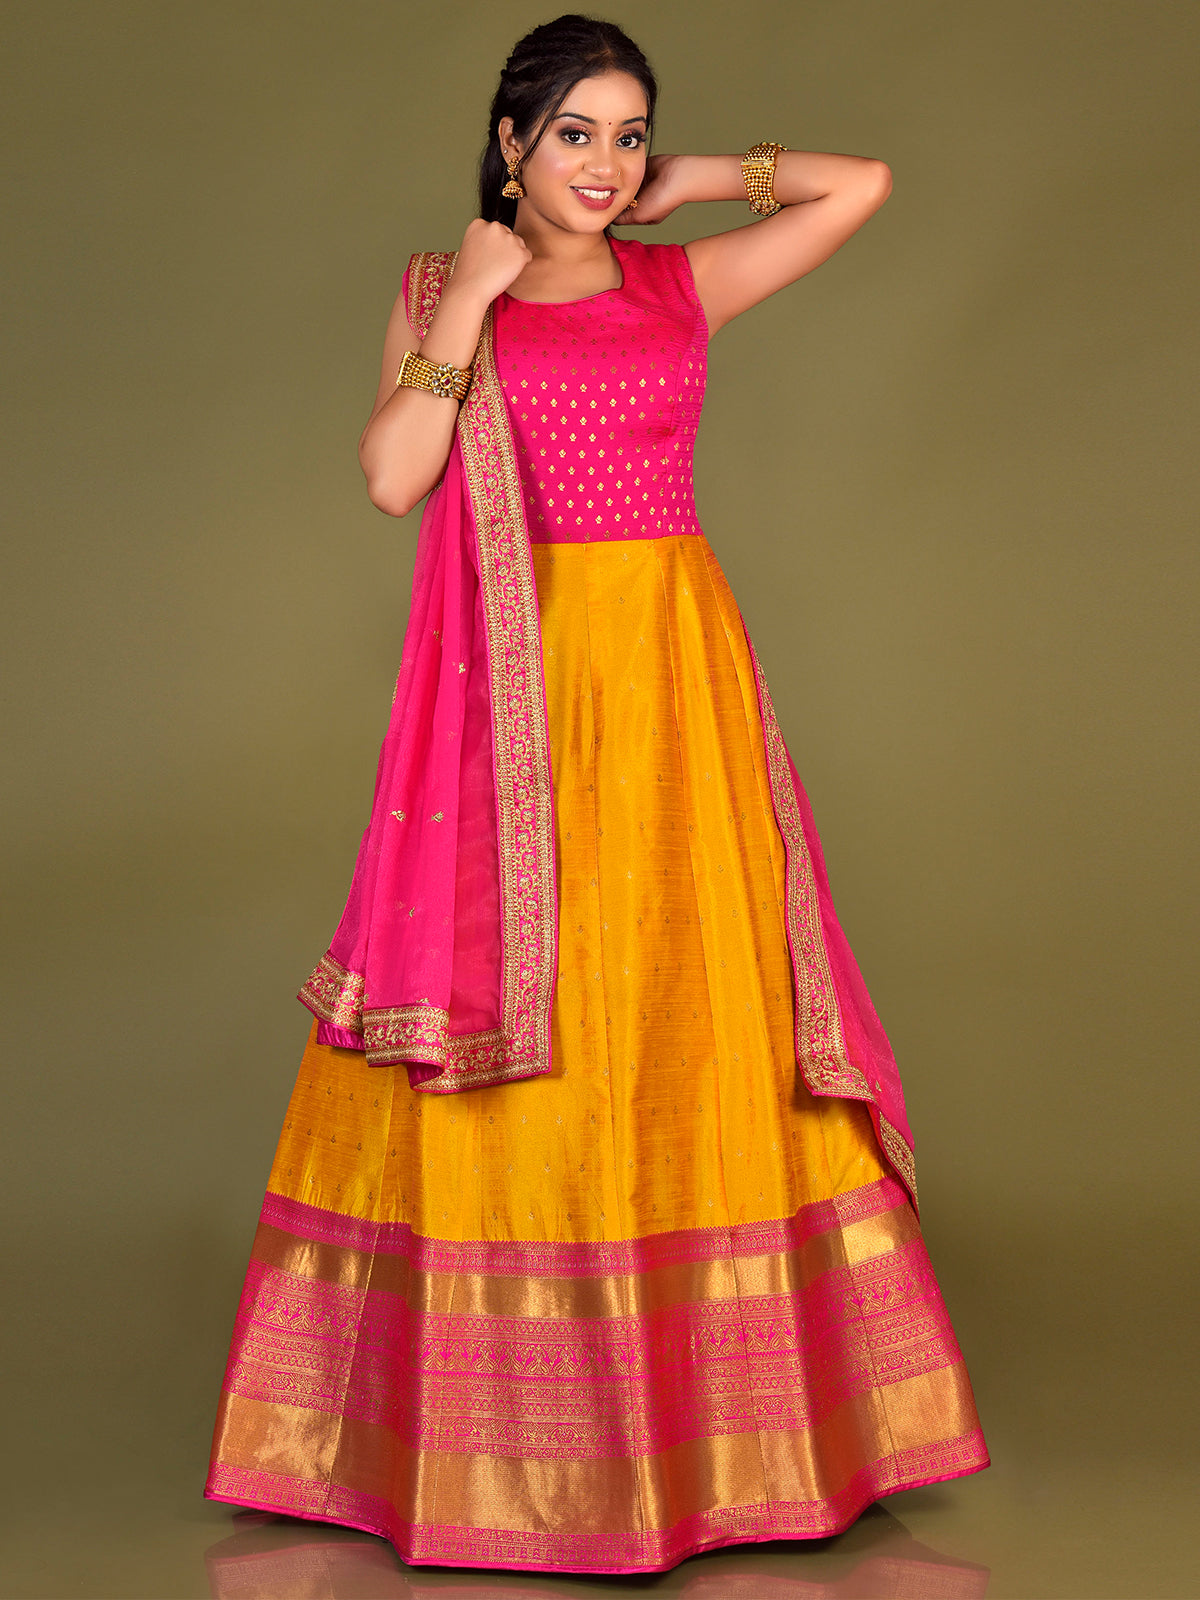 Ethnic Gowns | Ethnic Gown + Banarasi Dupatta | Freeup